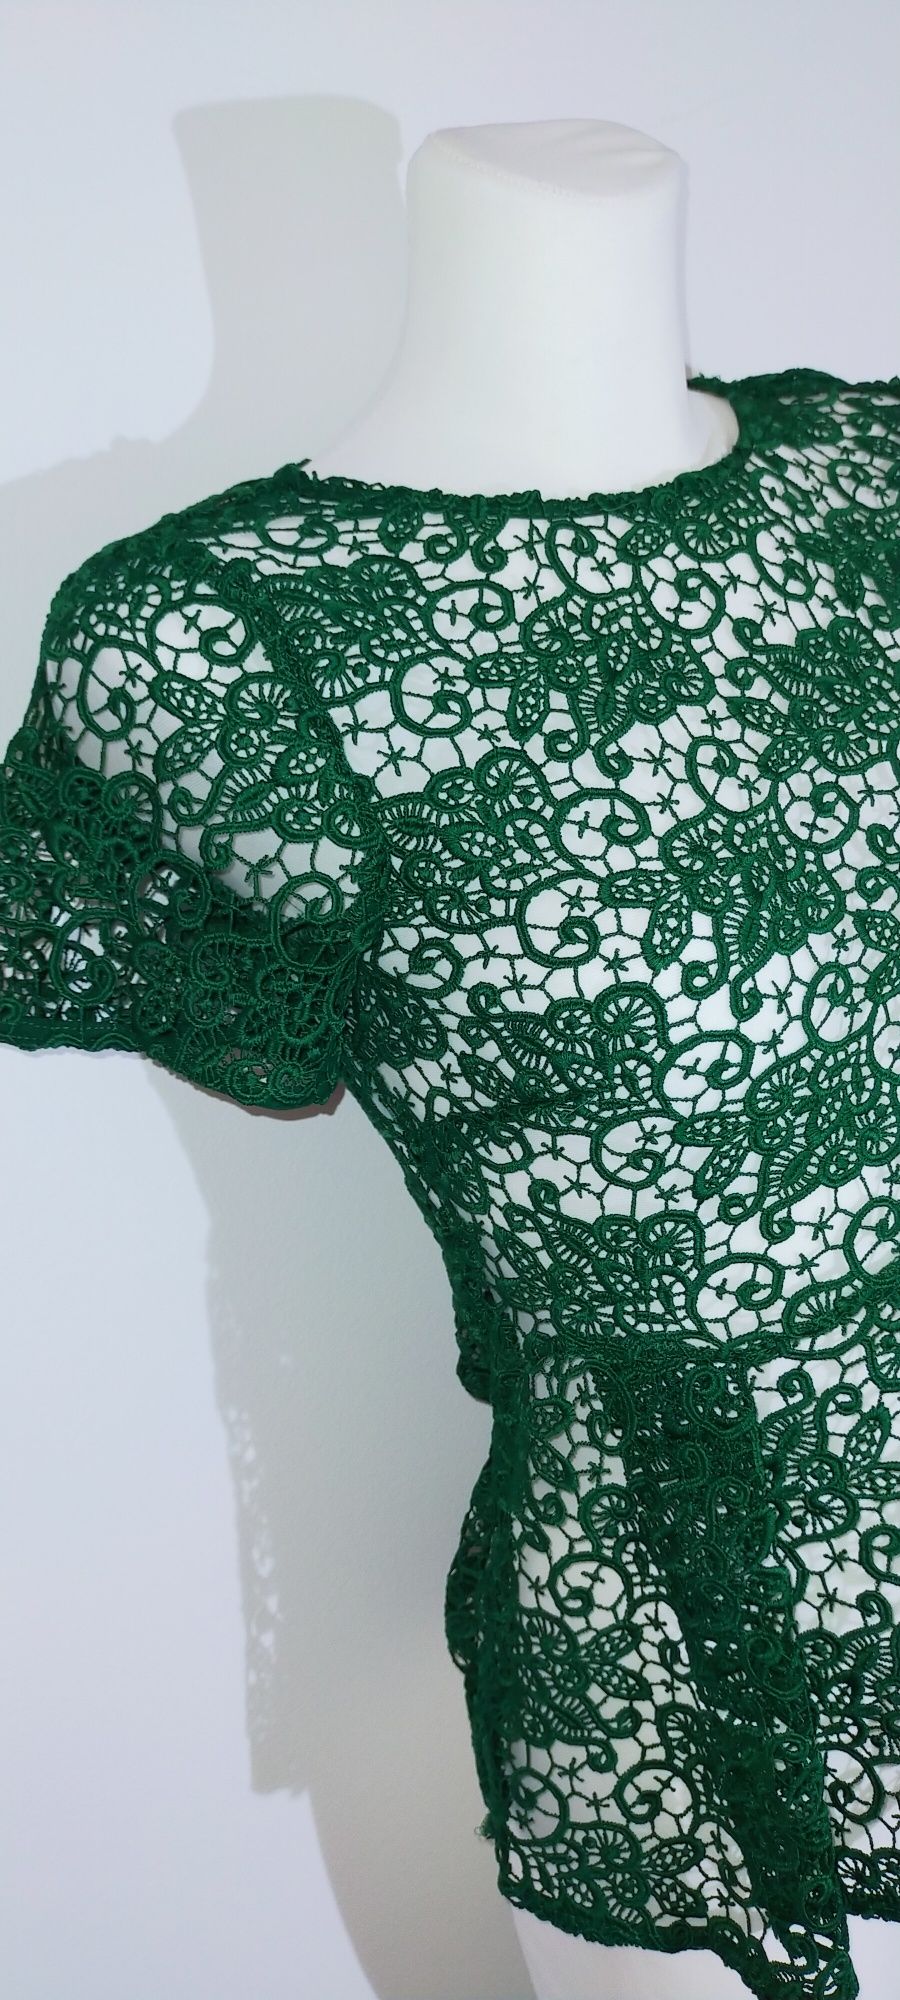 Bluzka elegancka baskinka koronkowa butelkowa zieleń 34 XS